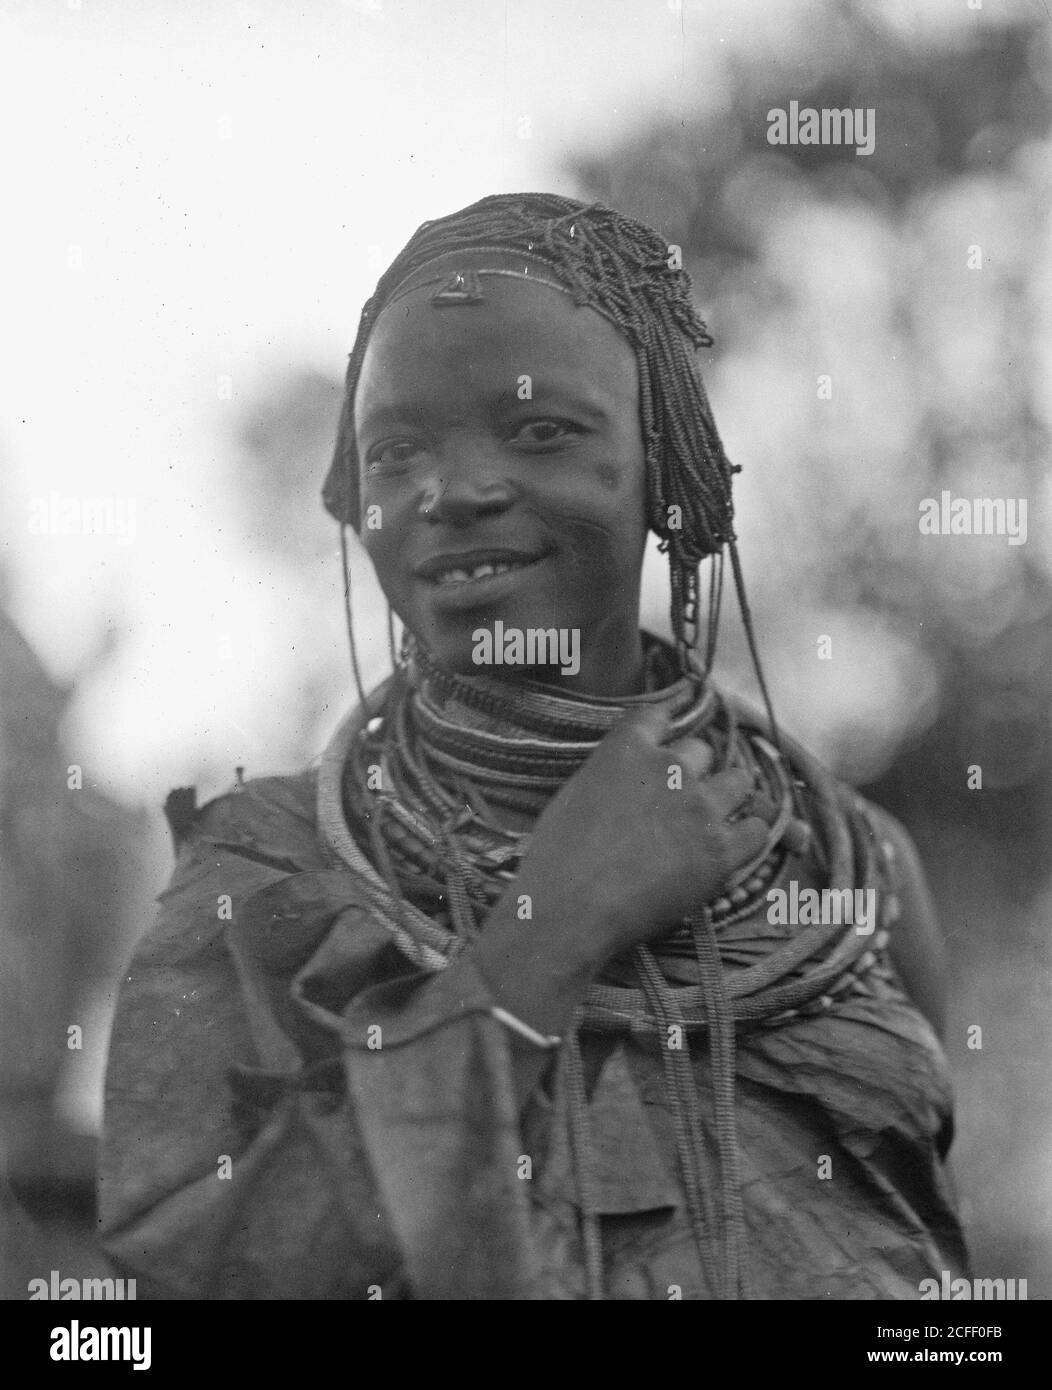 Originalunterschrift: Tanganjika. Auf dem Weg nach Longido. Tanganjika Mädchen mit Perlen Kopfbedeckung - Ort: Tansania ca. 1936 Stockfoto